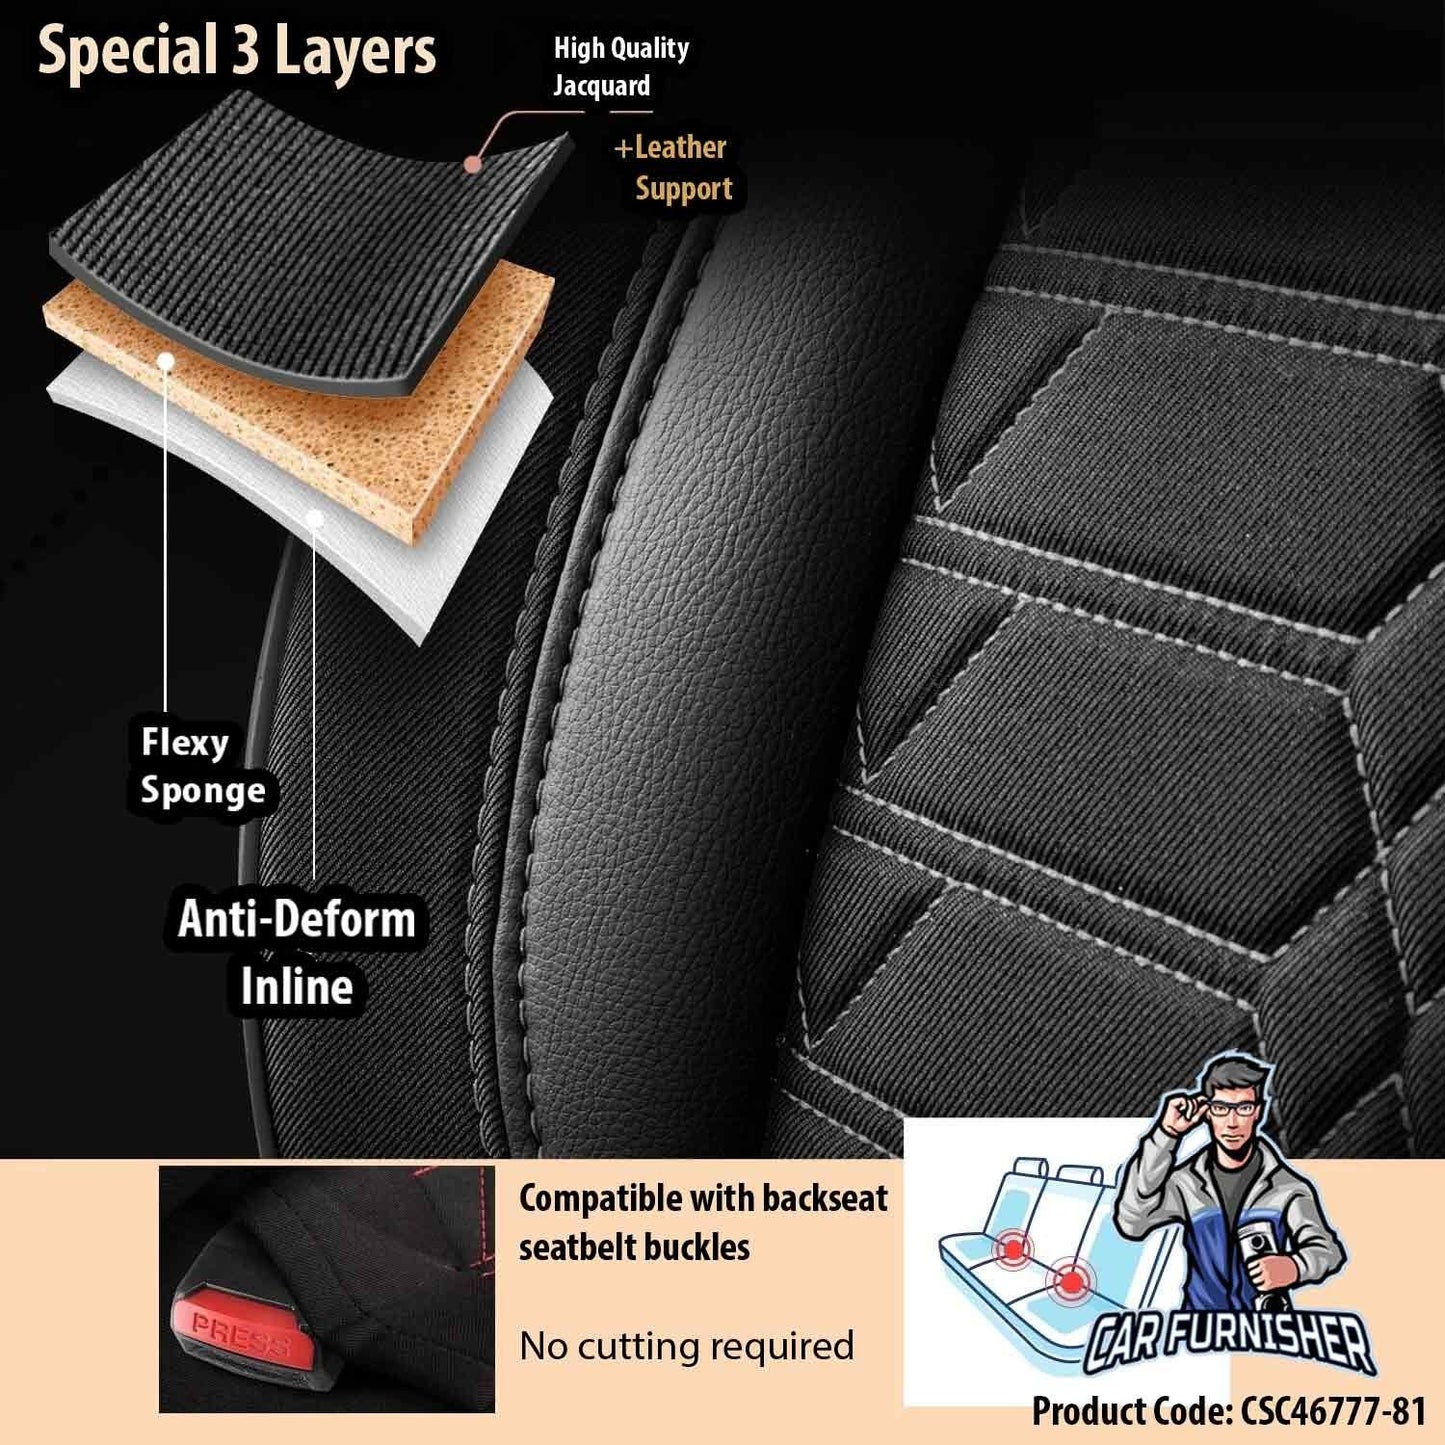 Mercedes 190 Seat Covers Venetian Design Black 5 Seats + Headrests (Full Set) Leather & Jacquard Fabric